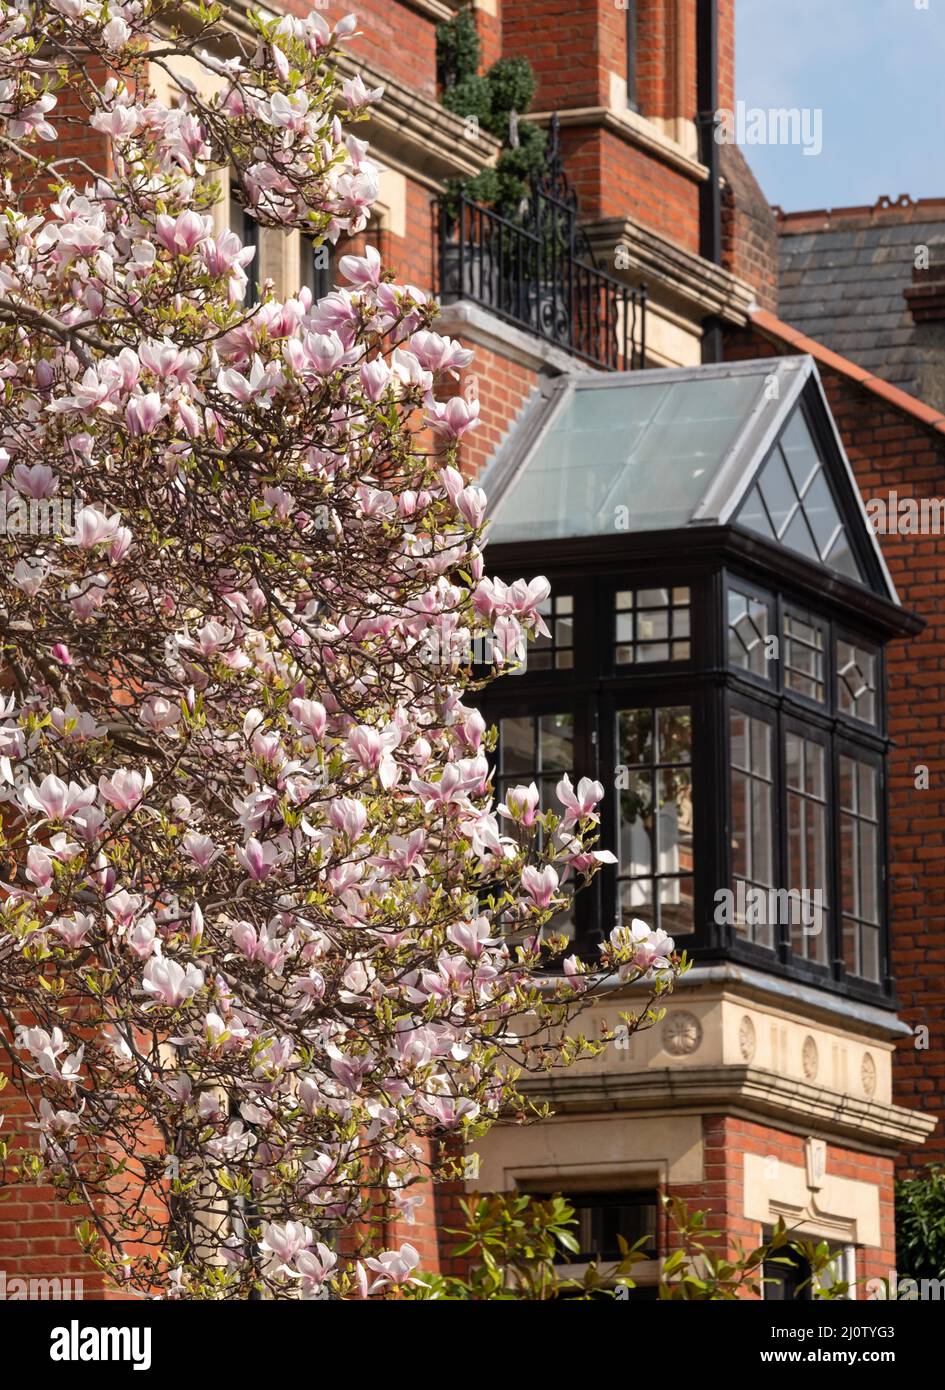 Magnolia tree with stunning pink flowers. Photographed on Eldon Street in Kensington, west London UK. Stock Photo